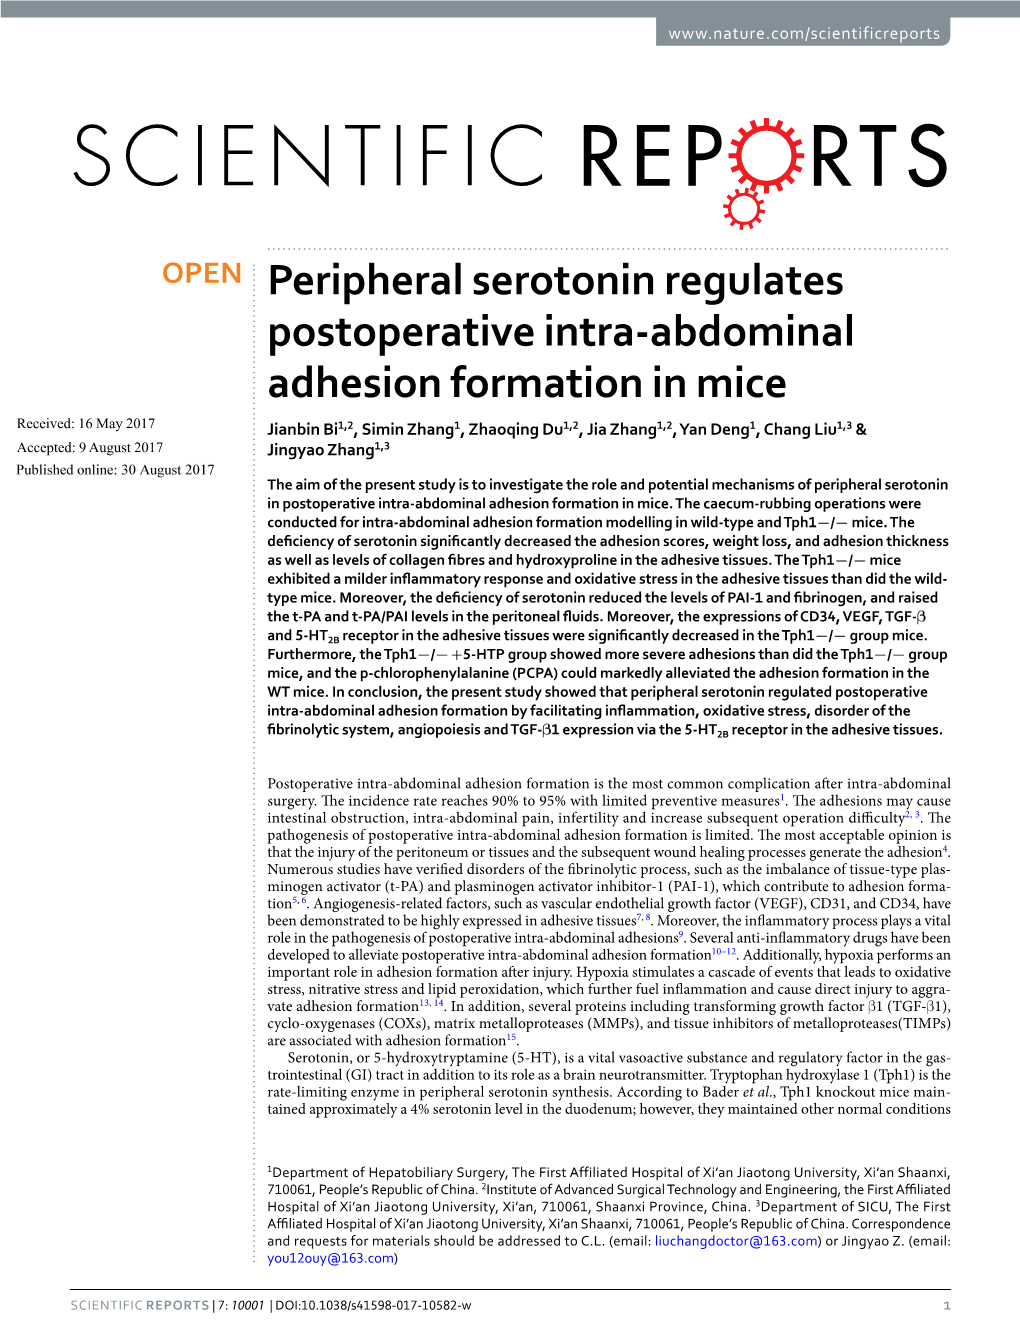 Peripheral Serotonin Regulates Postoperative Intra-Abdominal